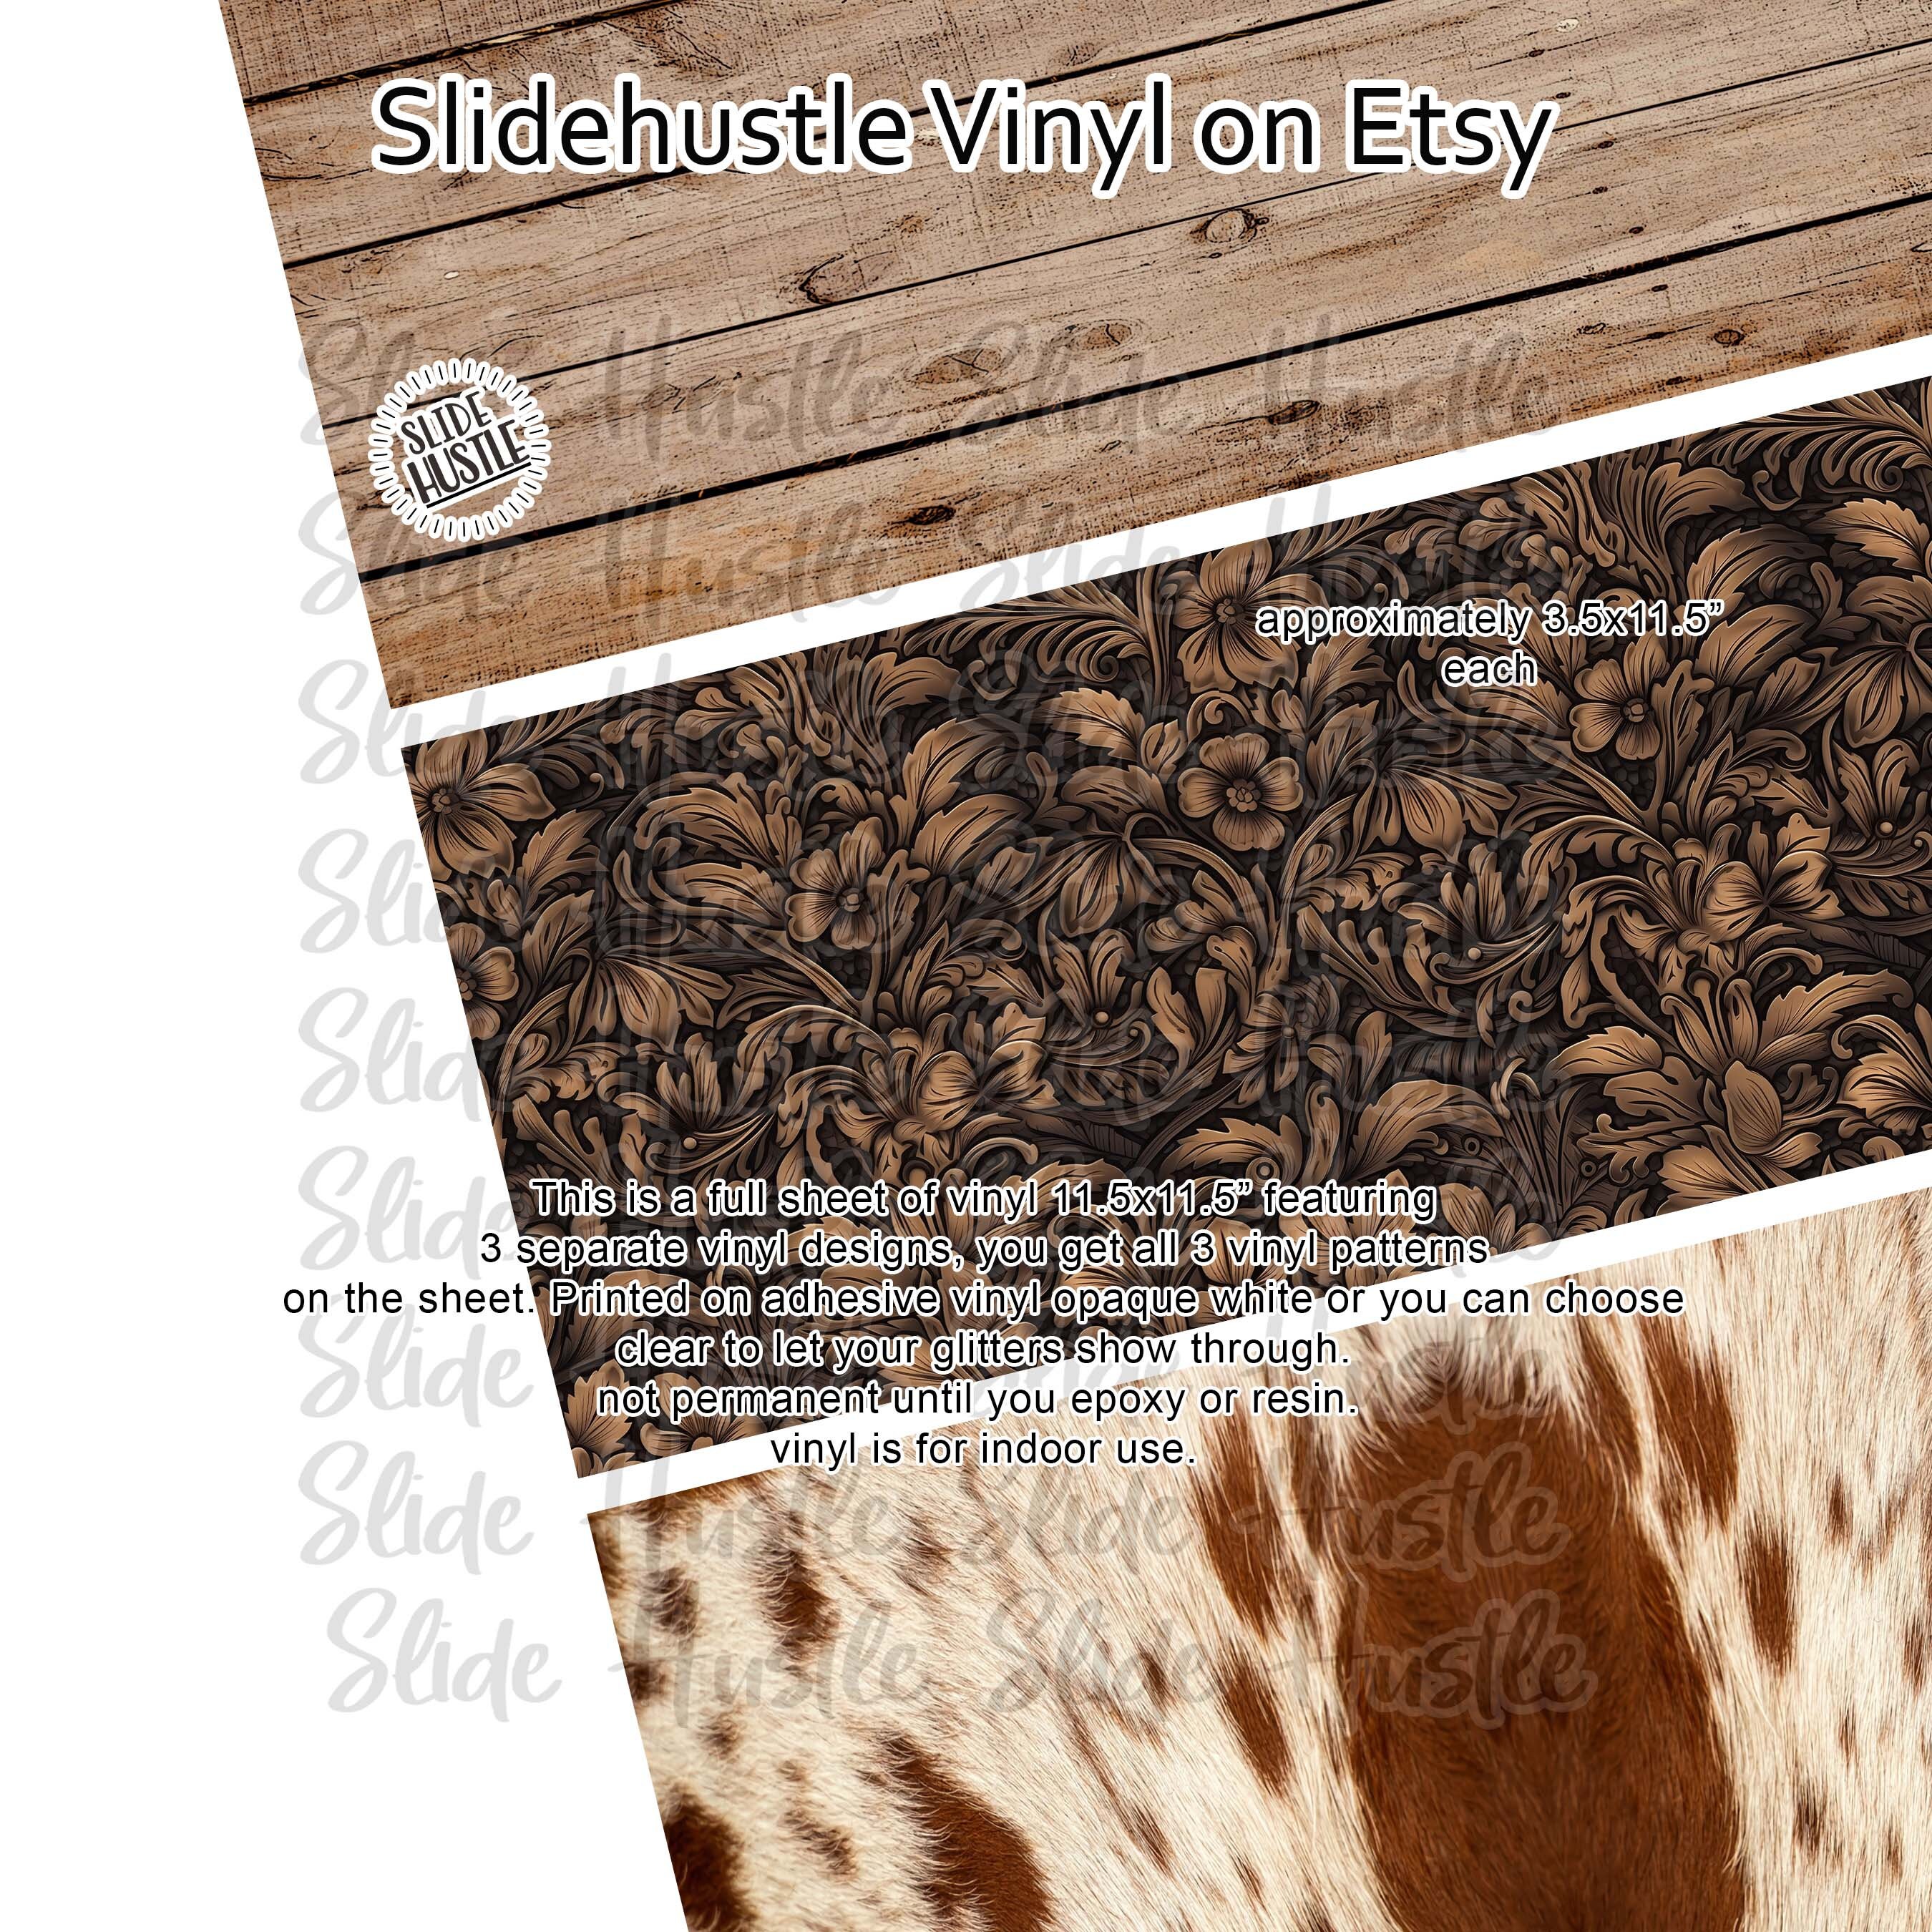 Vinyl Boutique Shop Craft Adhesive Boho Pattern Vinyl Sheets Adhesive Vinyl,  Printed Vinyl, Patterned Vinyl, HTV, Vinyl Prints